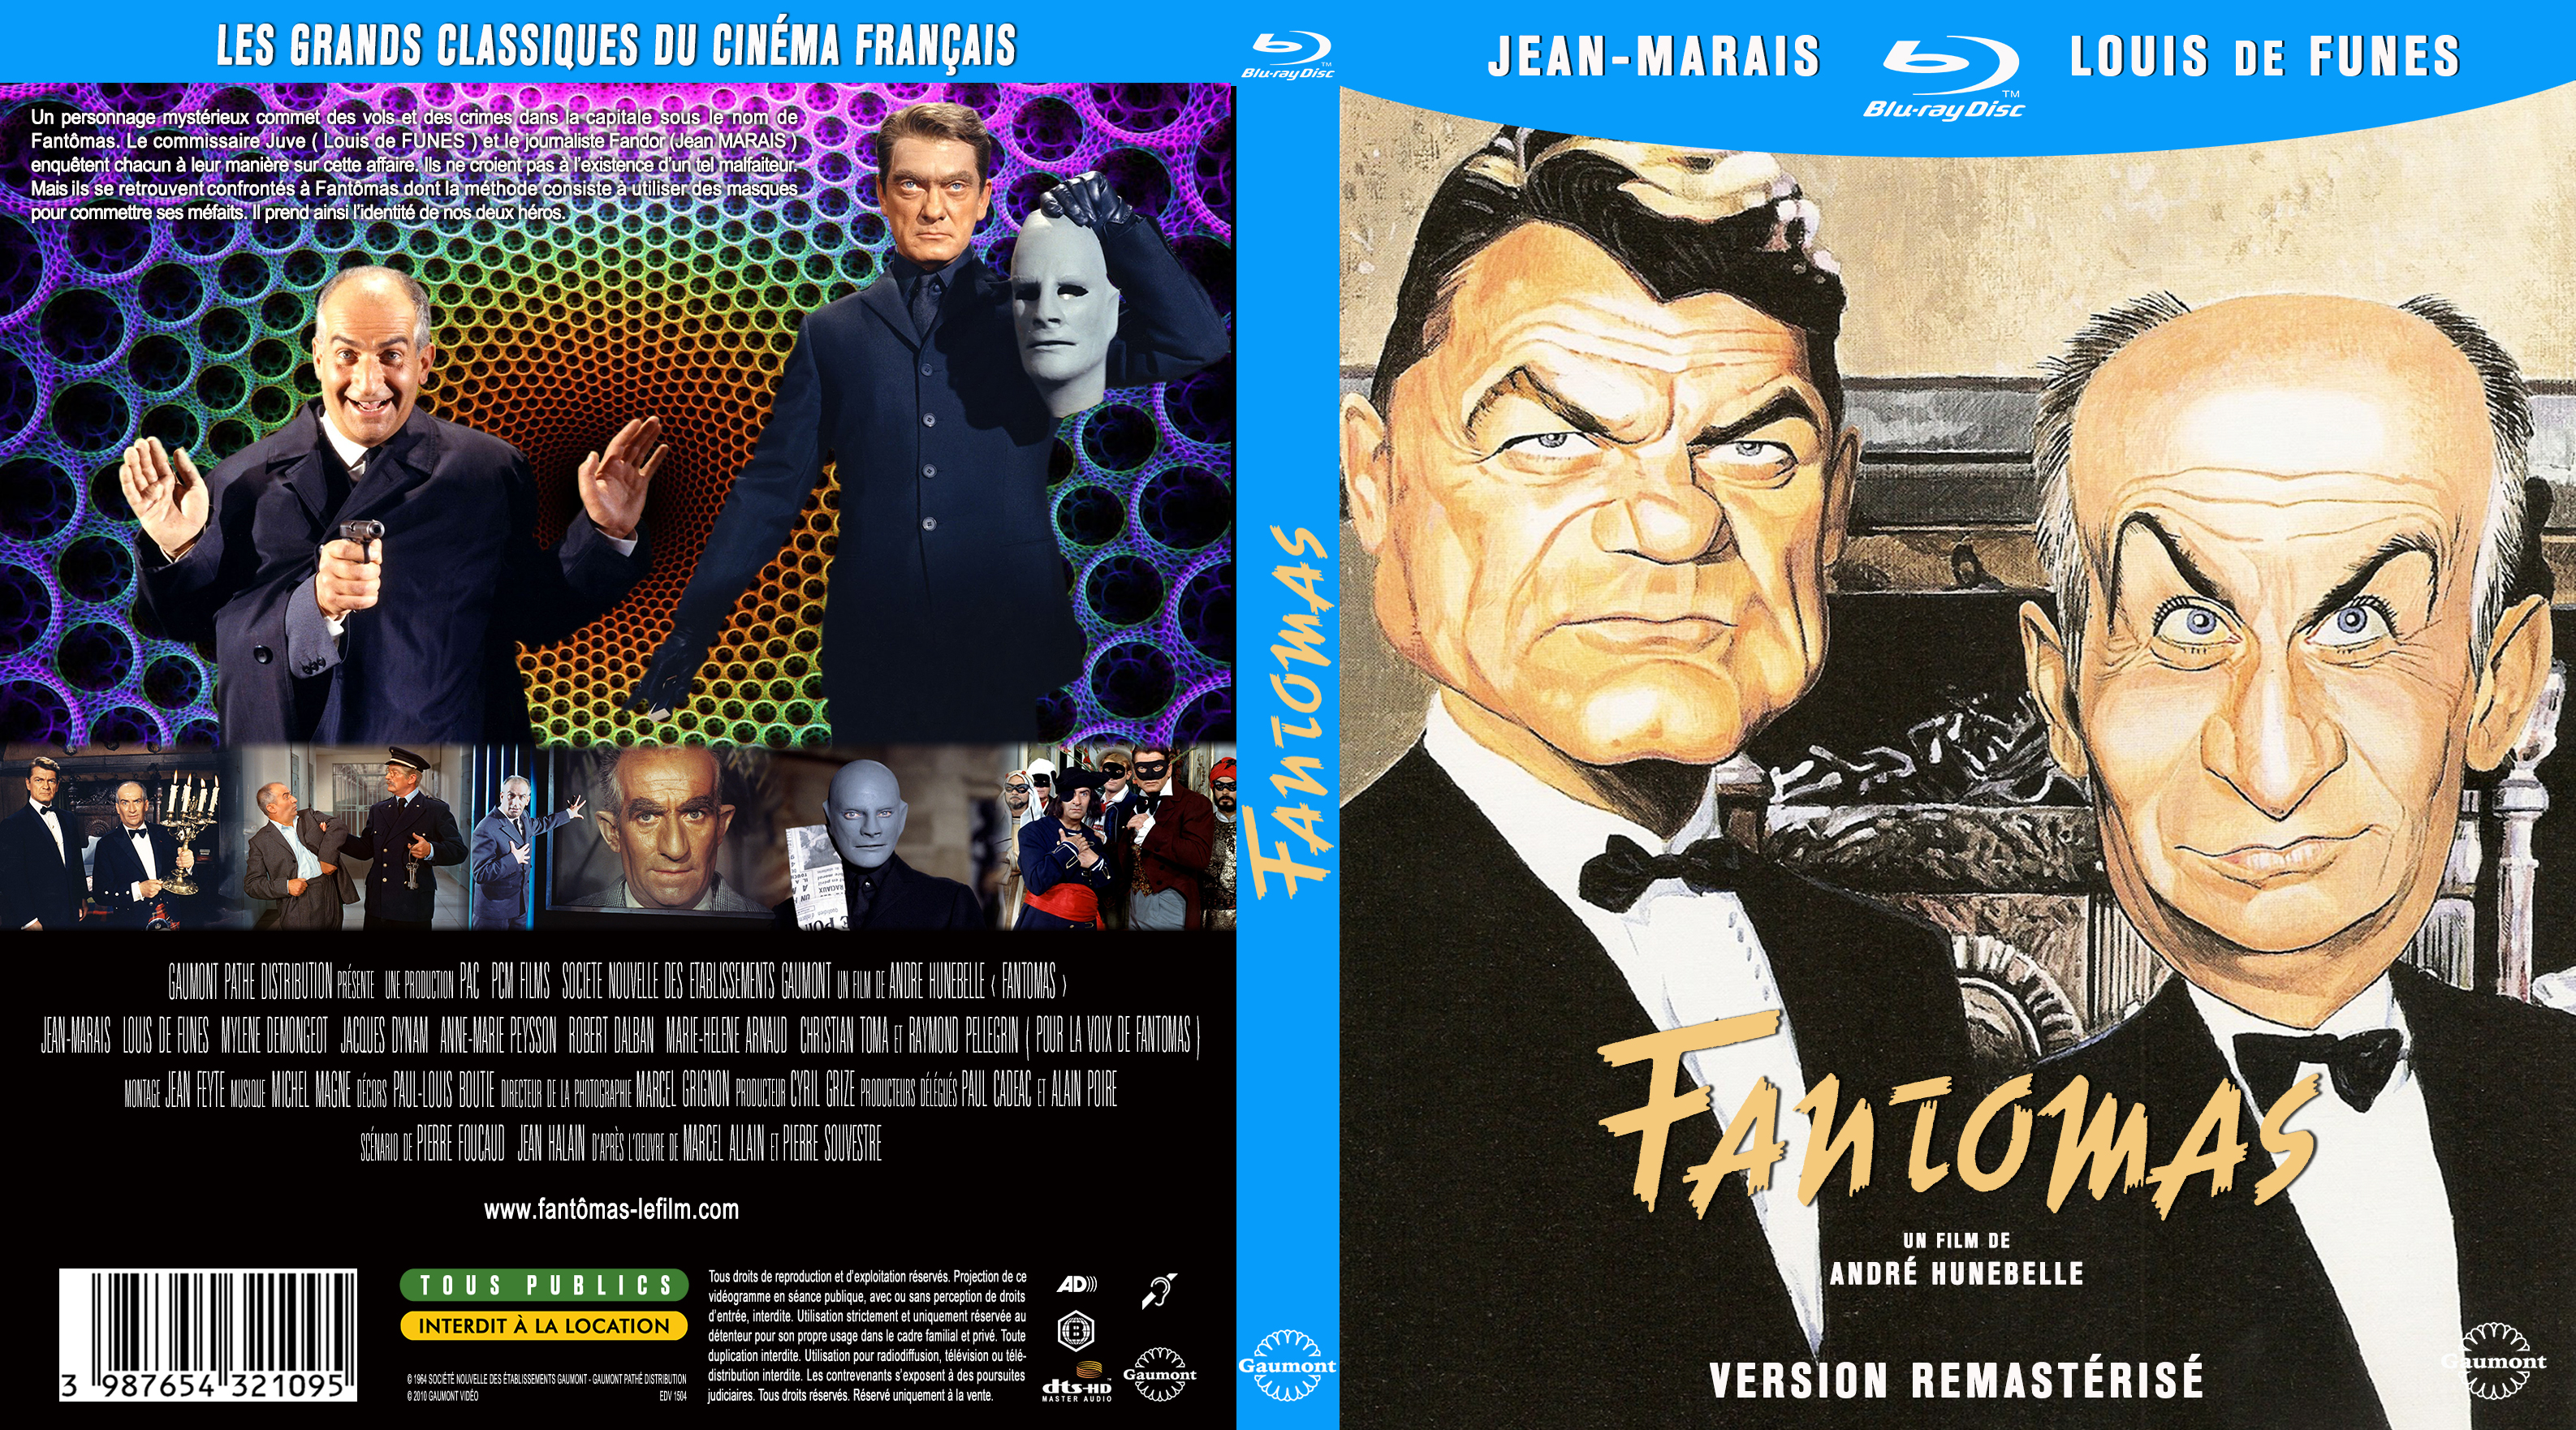 Jaquette DVD Fantomas custom (BLU-RAY)